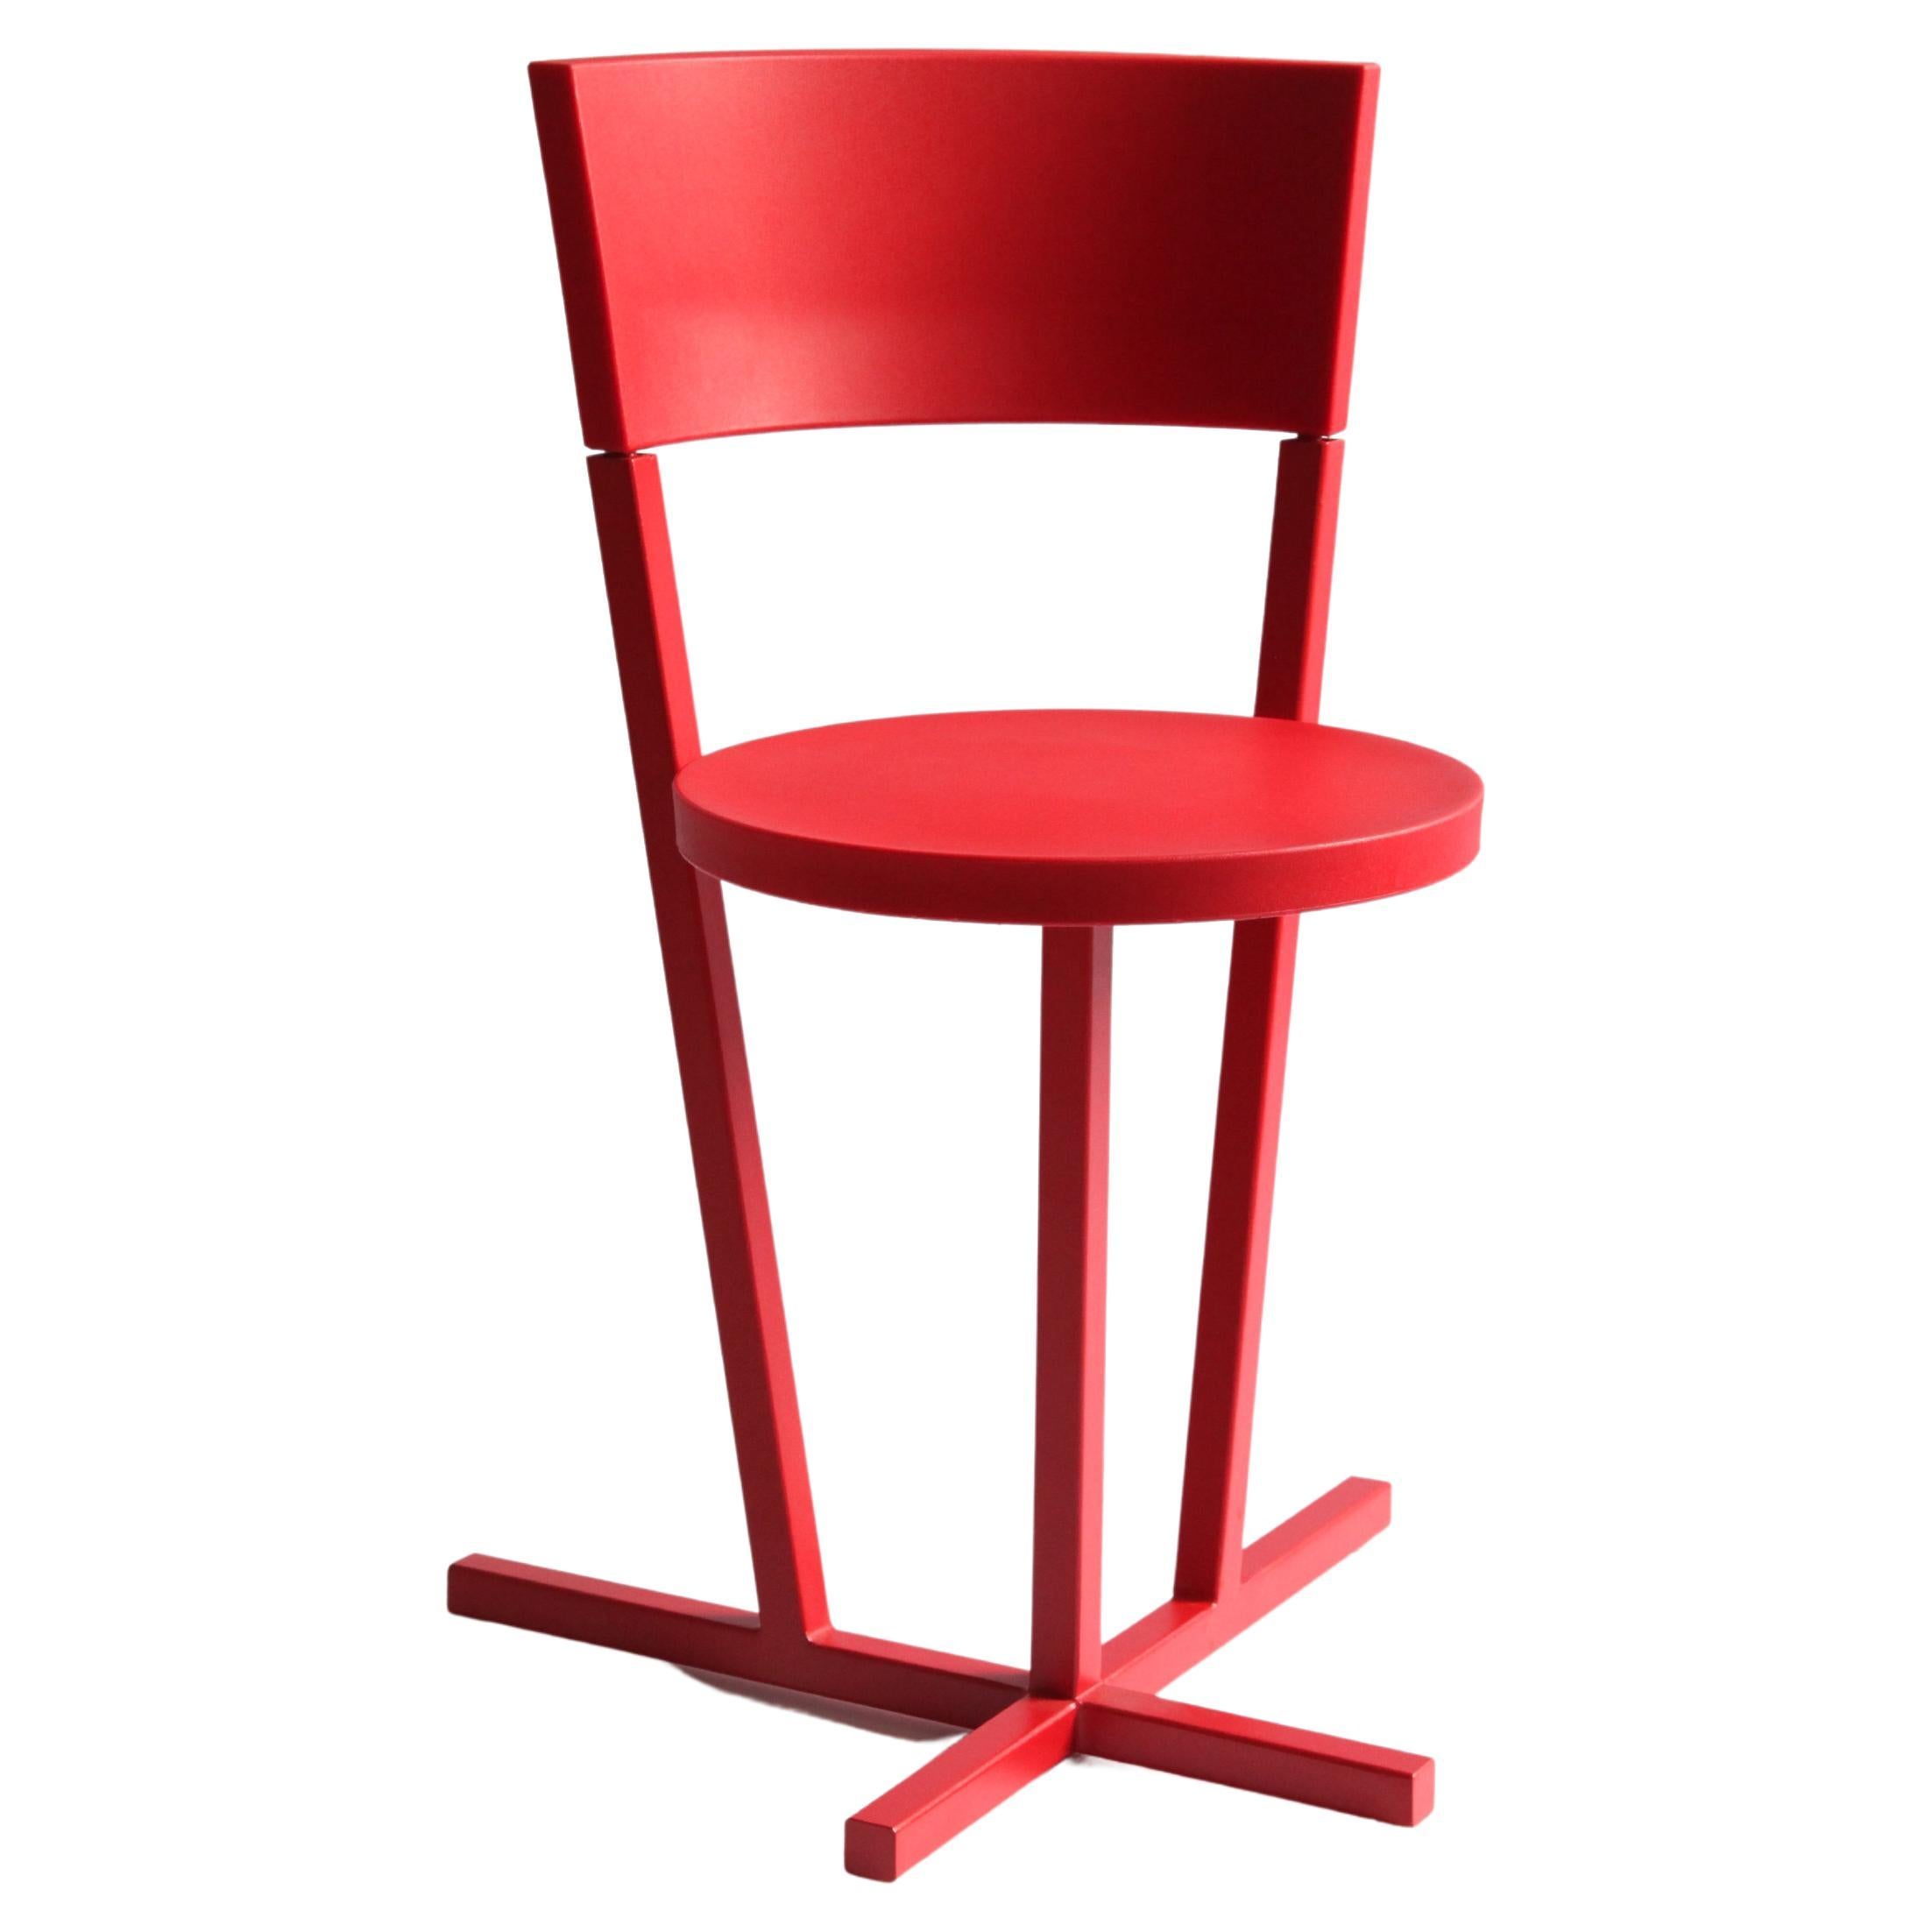 Stedelijk Museum Chair For Sale